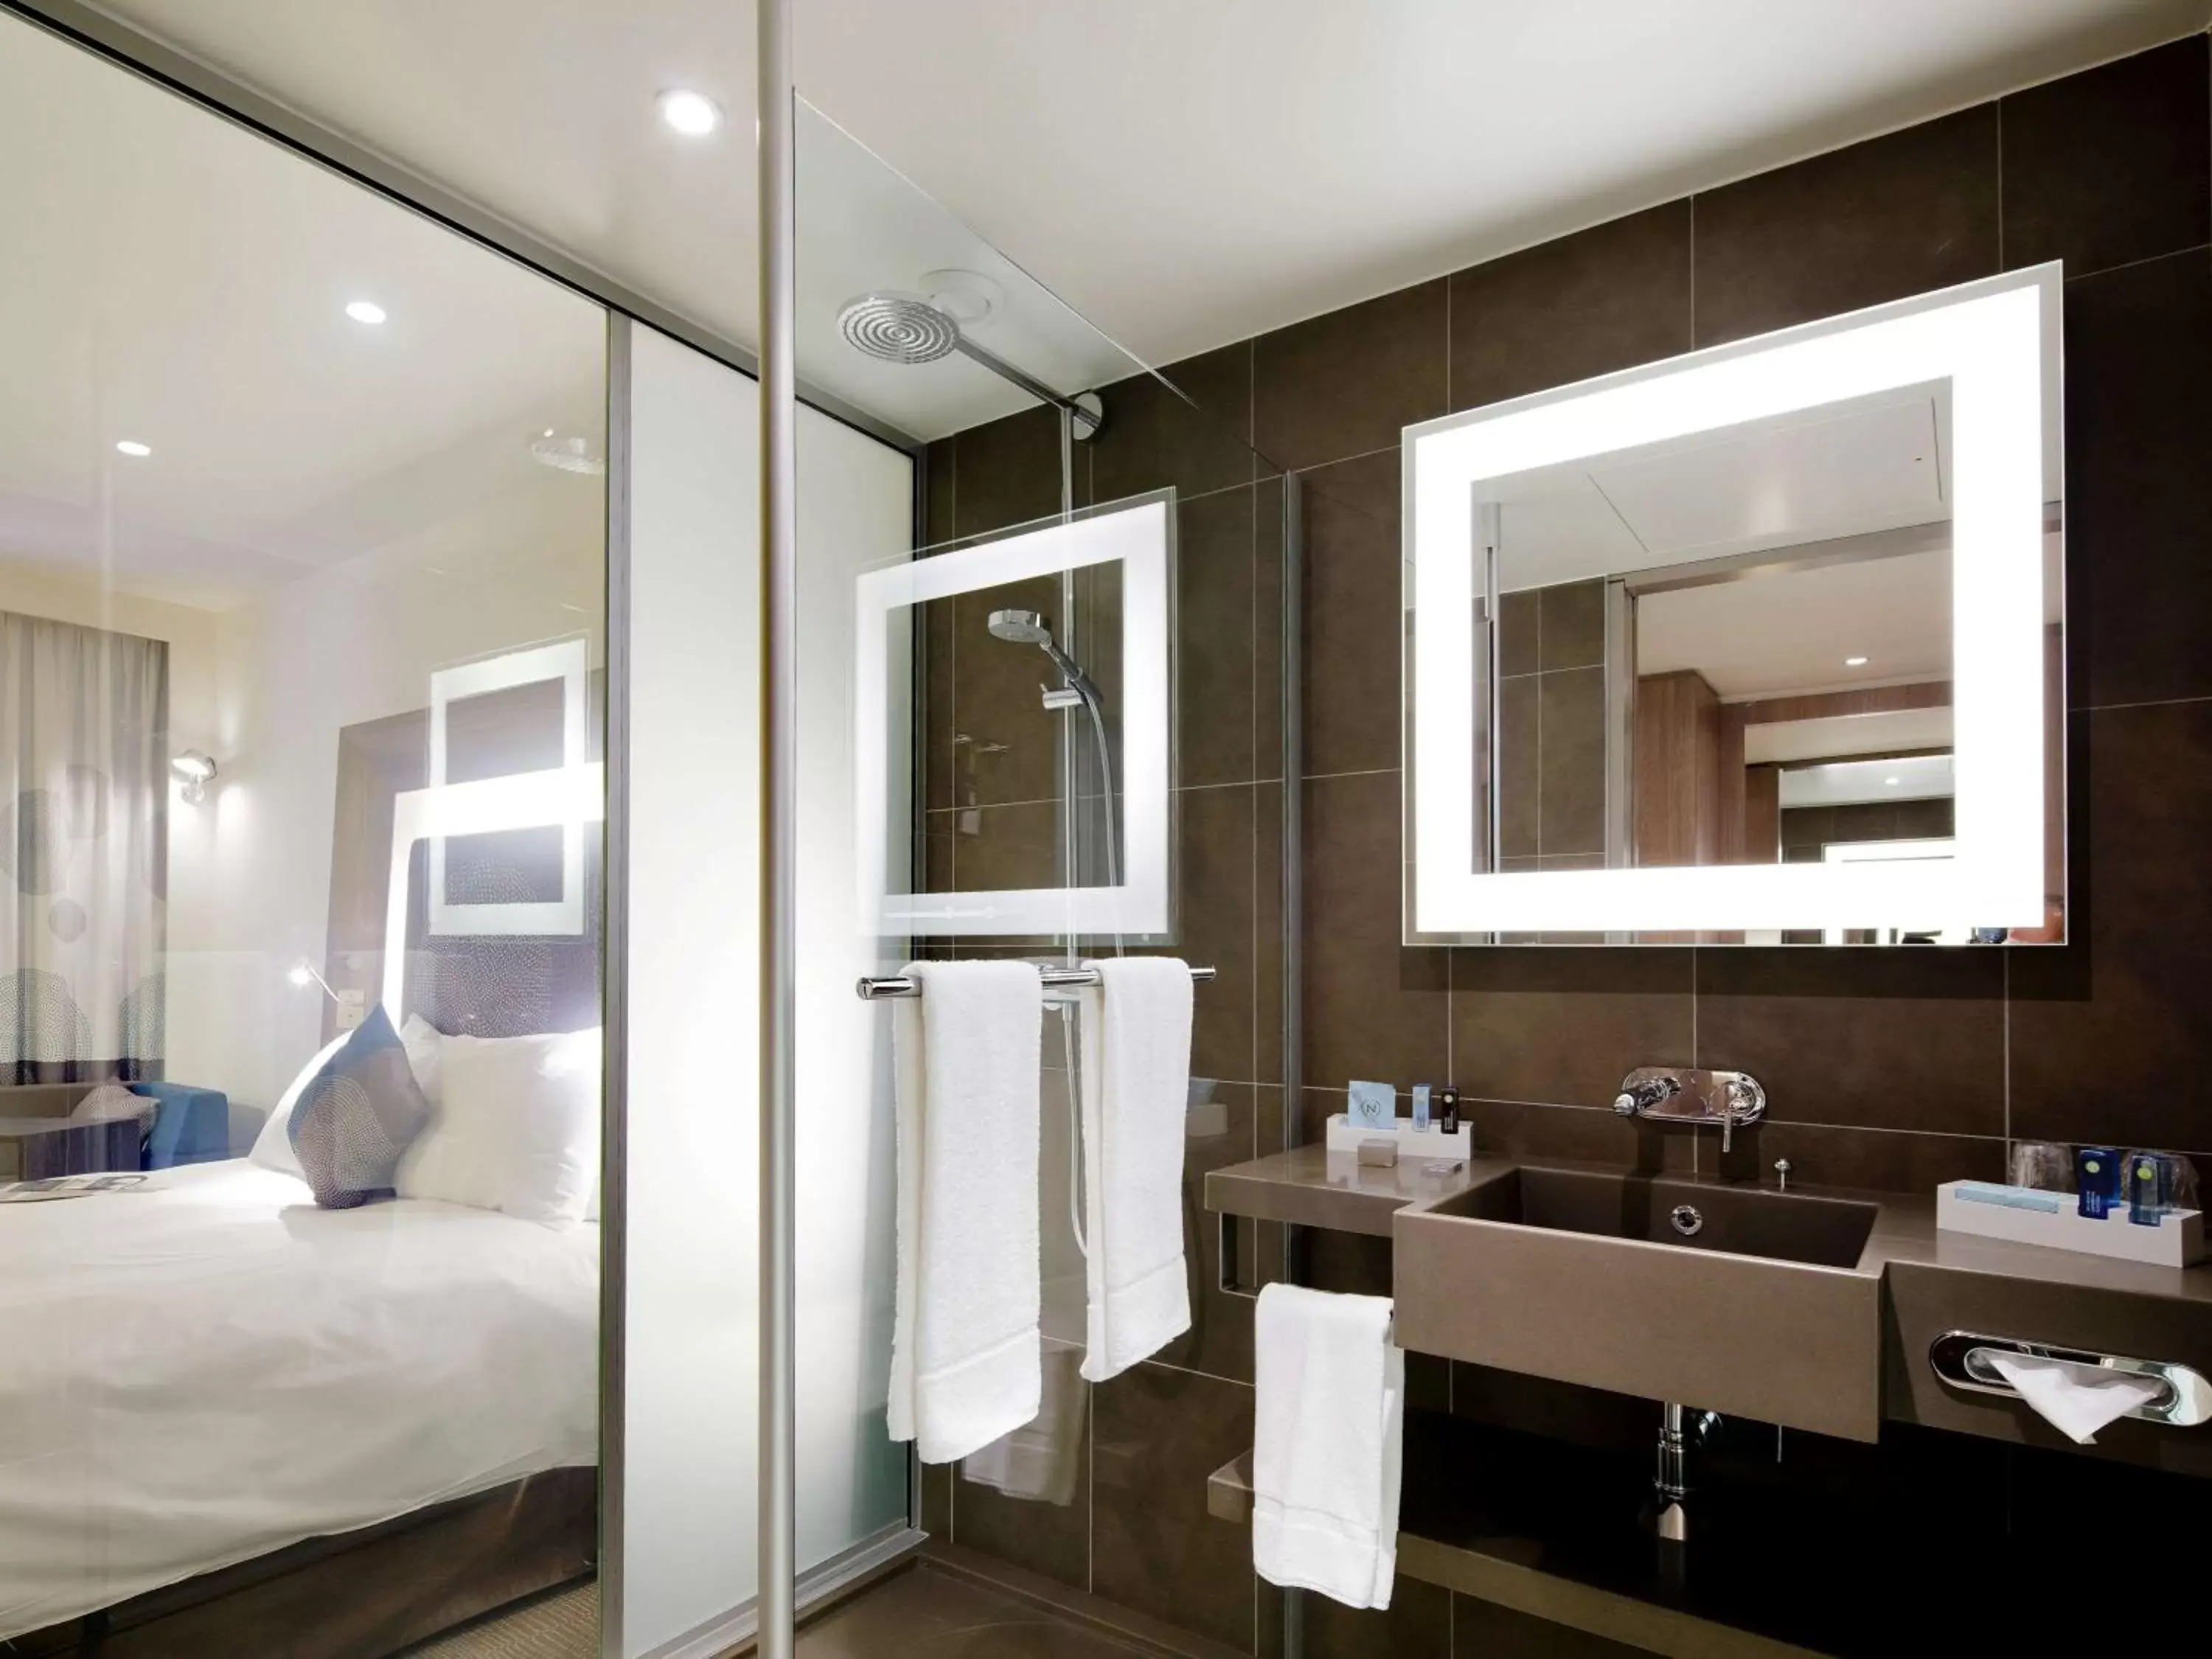 Photo of the whole room, Bathroom in Novotel London Tower Bridge